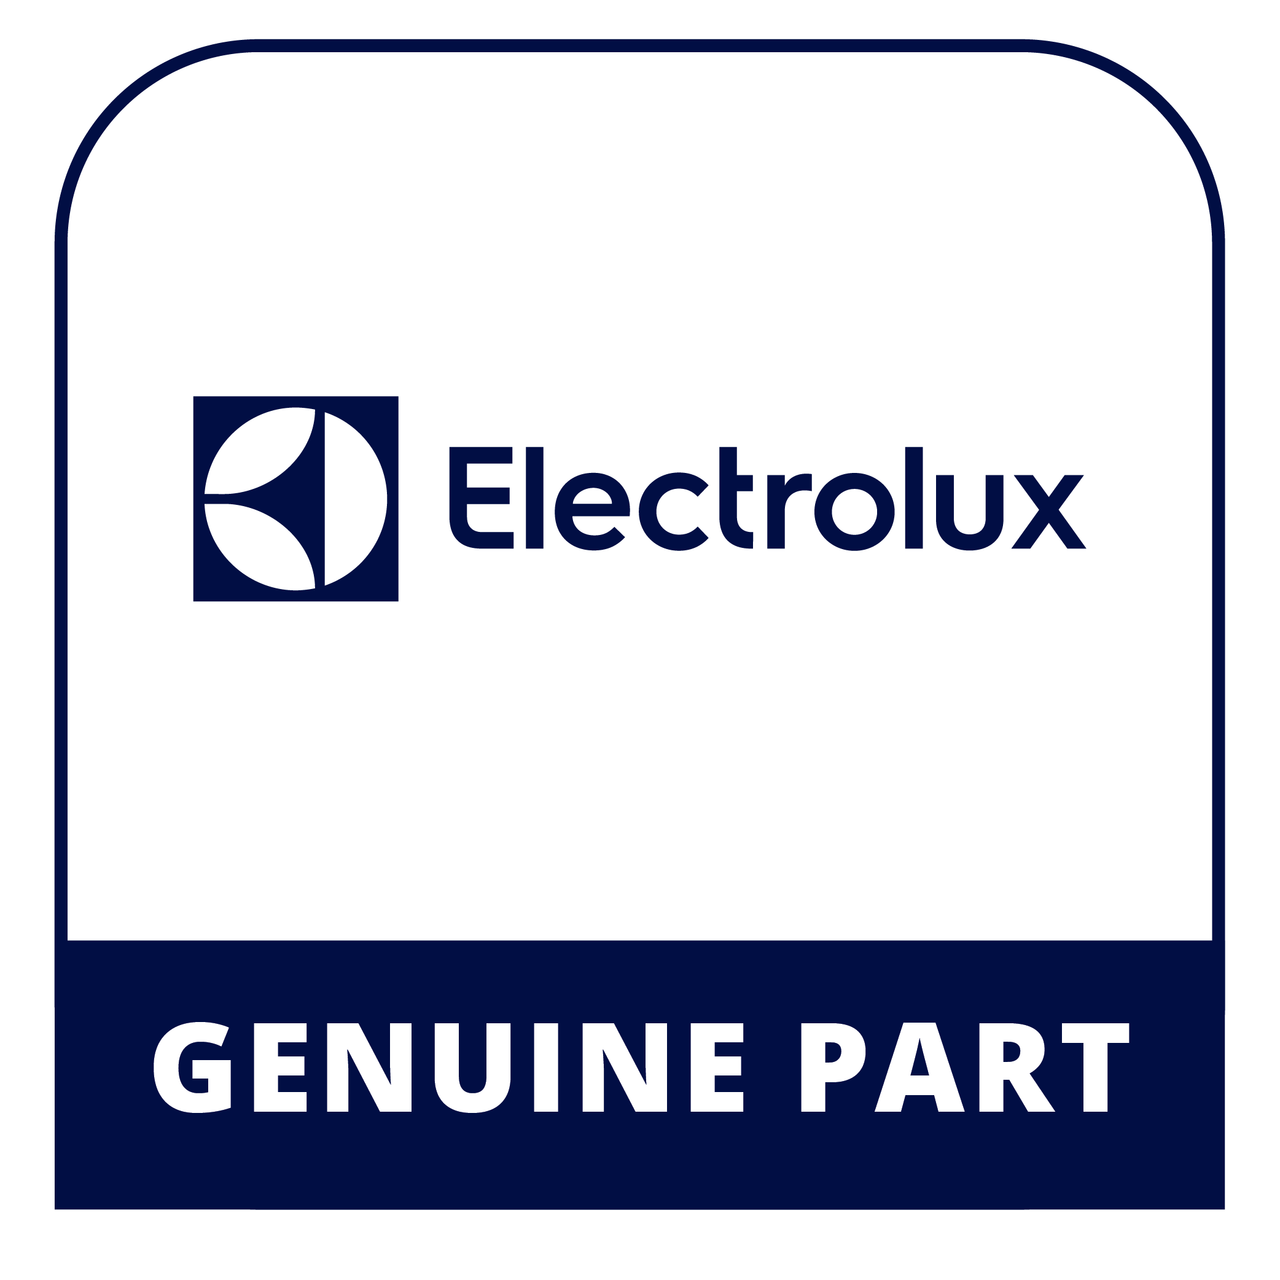 Frigidaire - Electrolux 5304495658 Motor - Genuine Electrolux Part